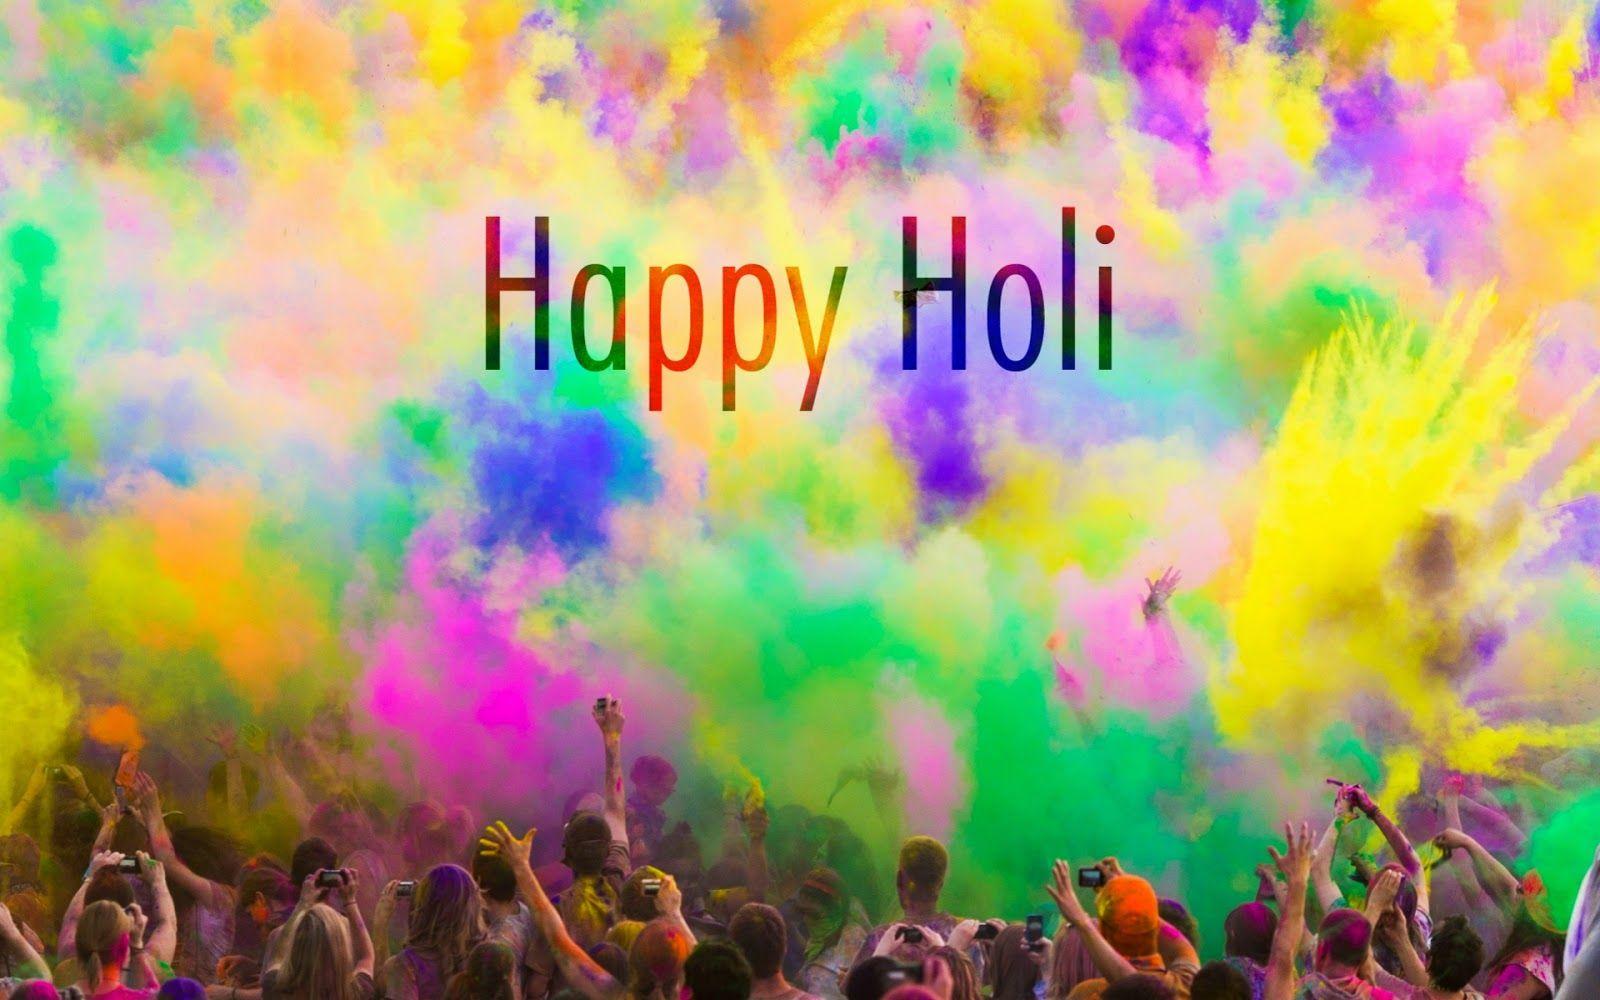 HD Quality Happy Holi Image, Wallpaper Holi Festival